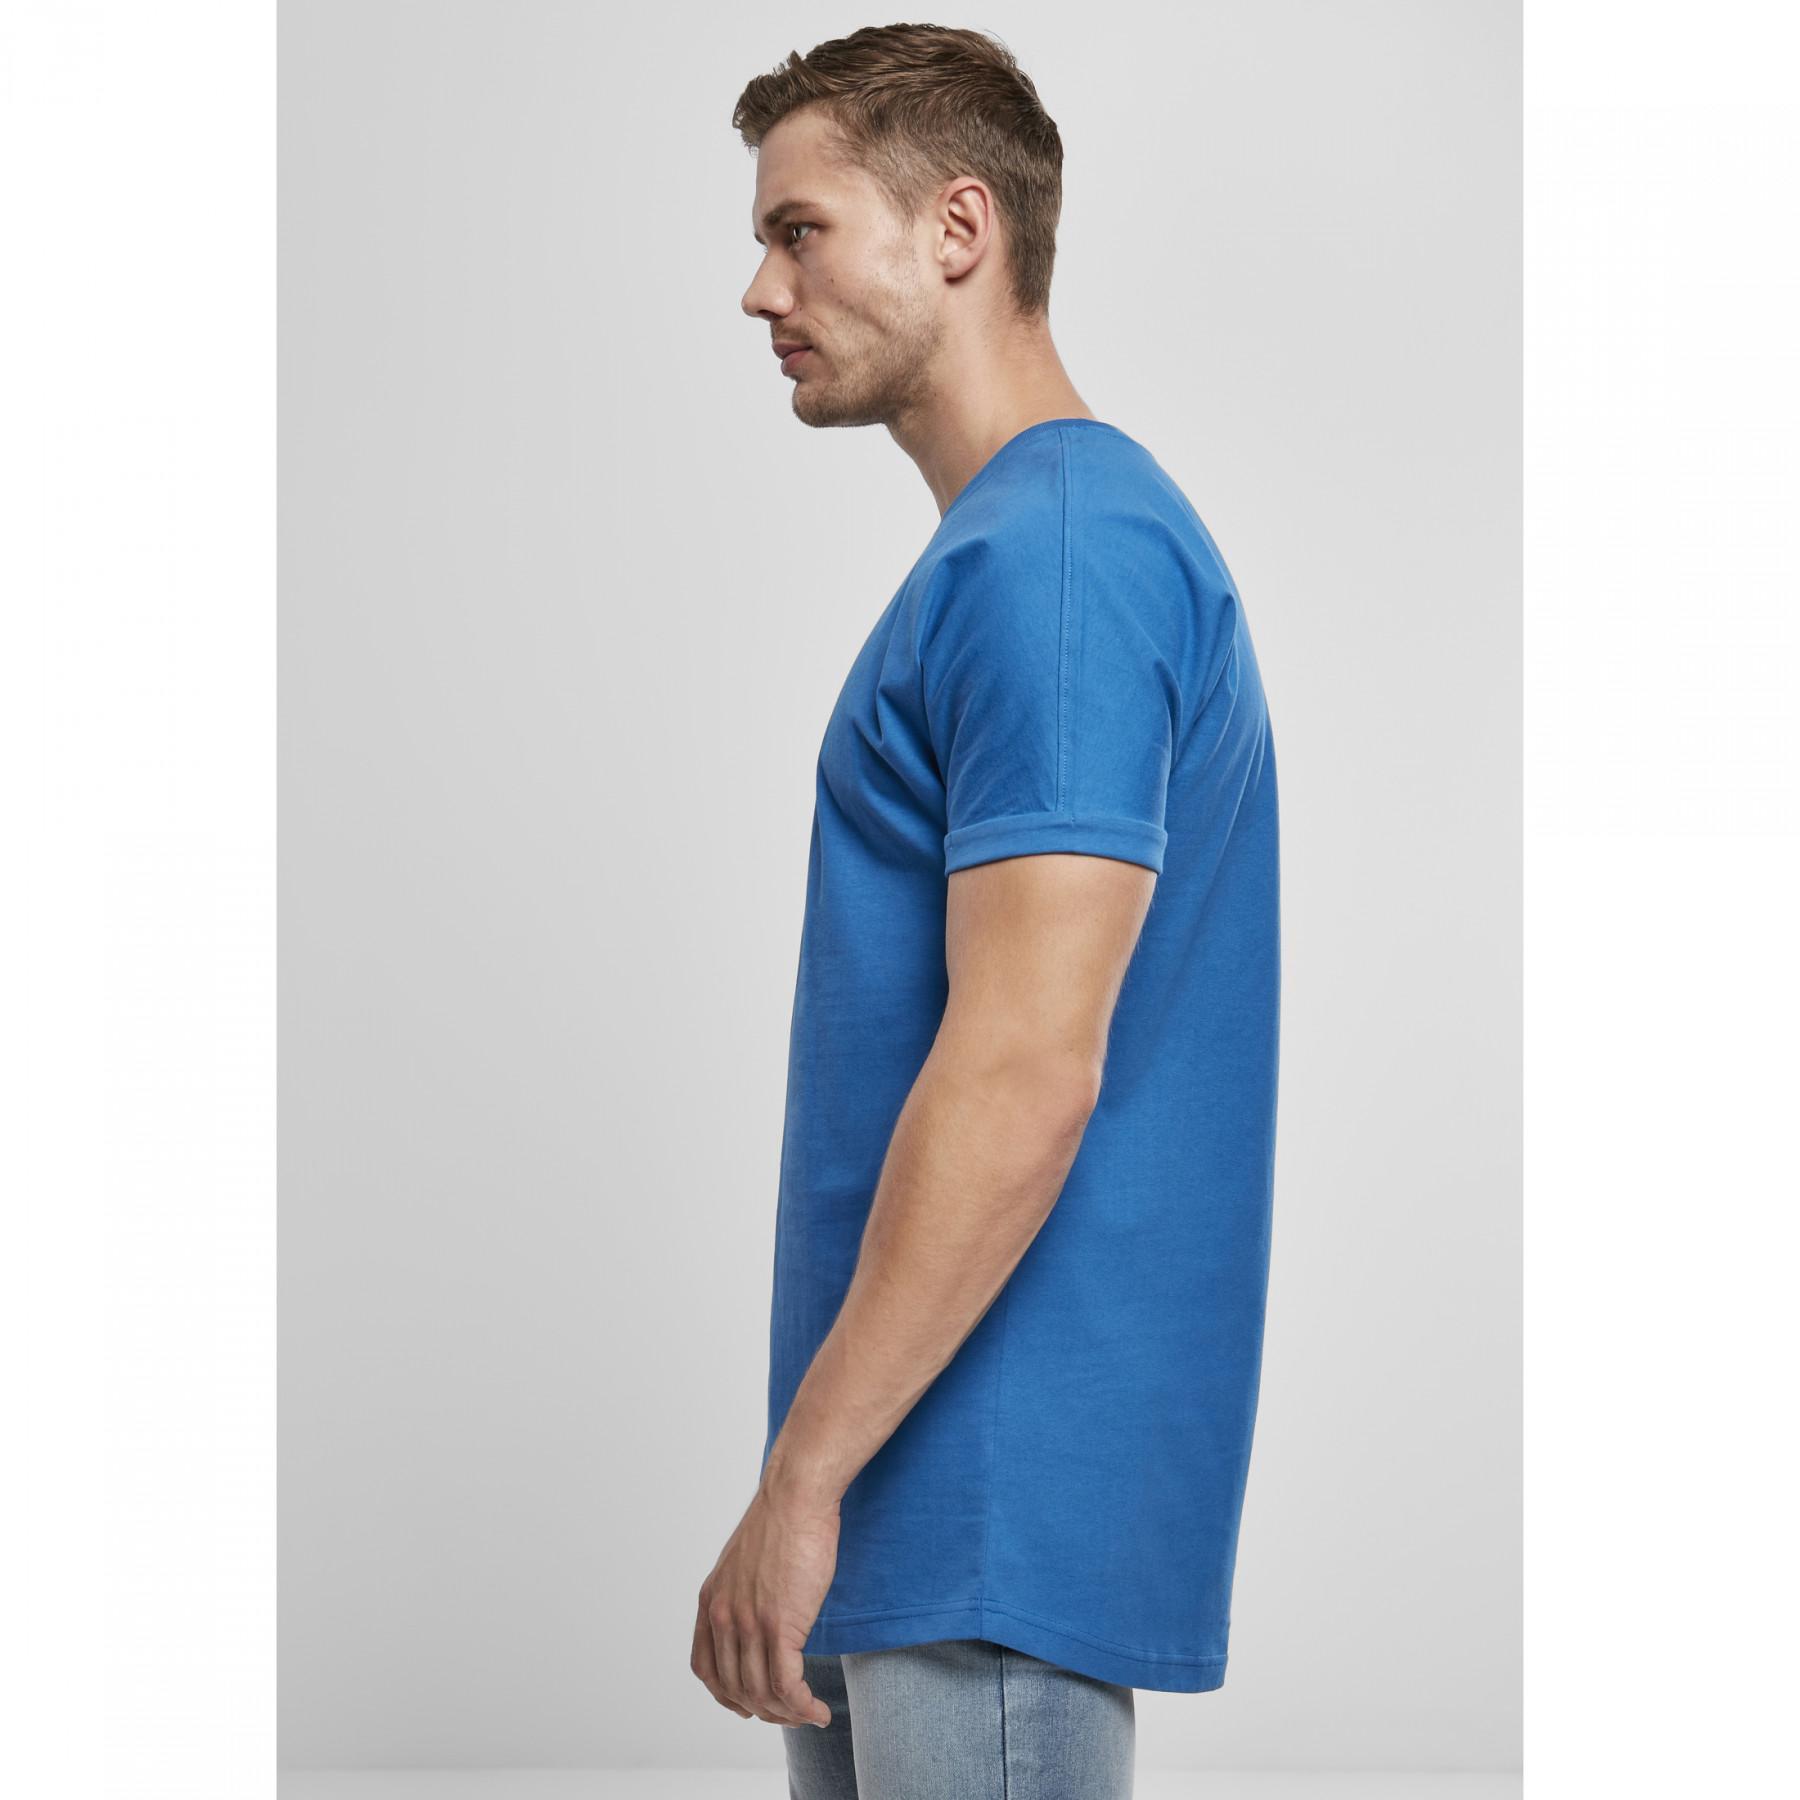 Classics and Lifestyle - Turnup Long Man T-shirts Tee - - Polo shirts Shaped Urban T-shirt